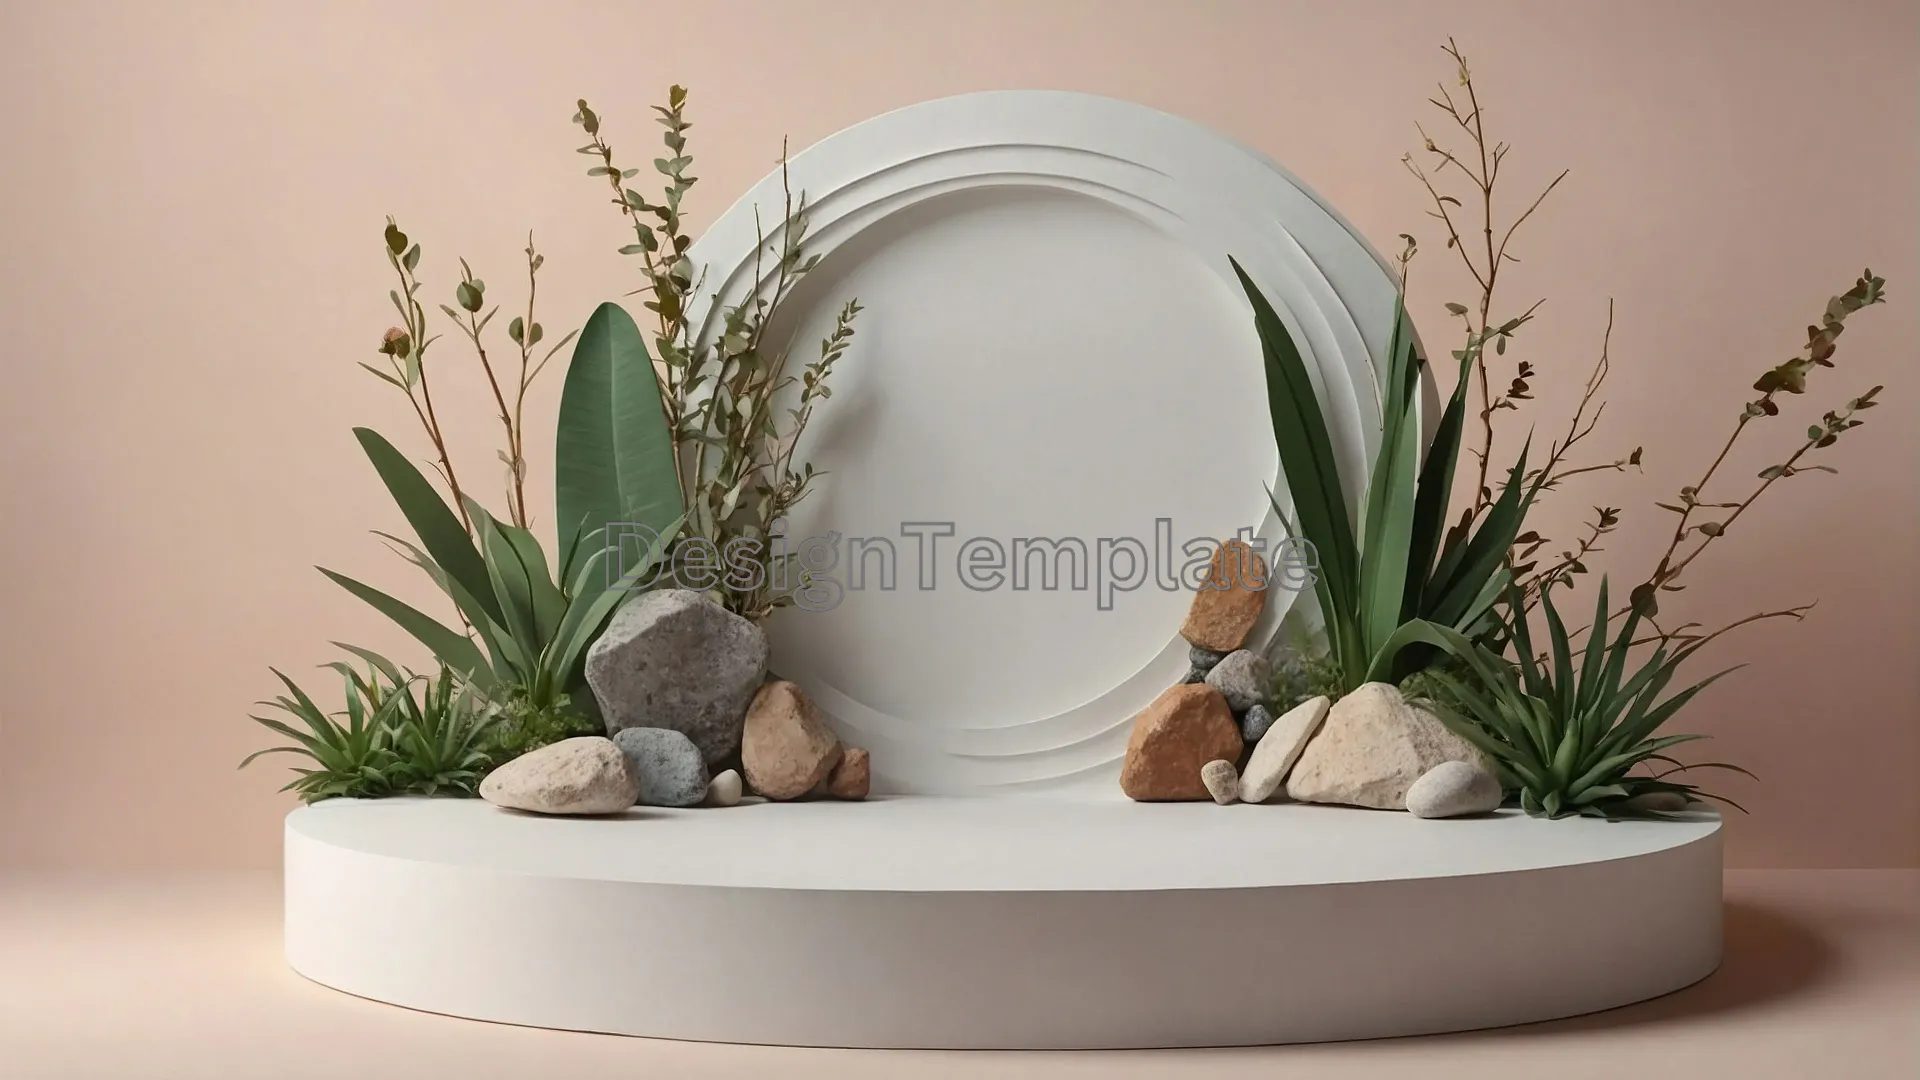 Serene Plant Frame Background Texture image